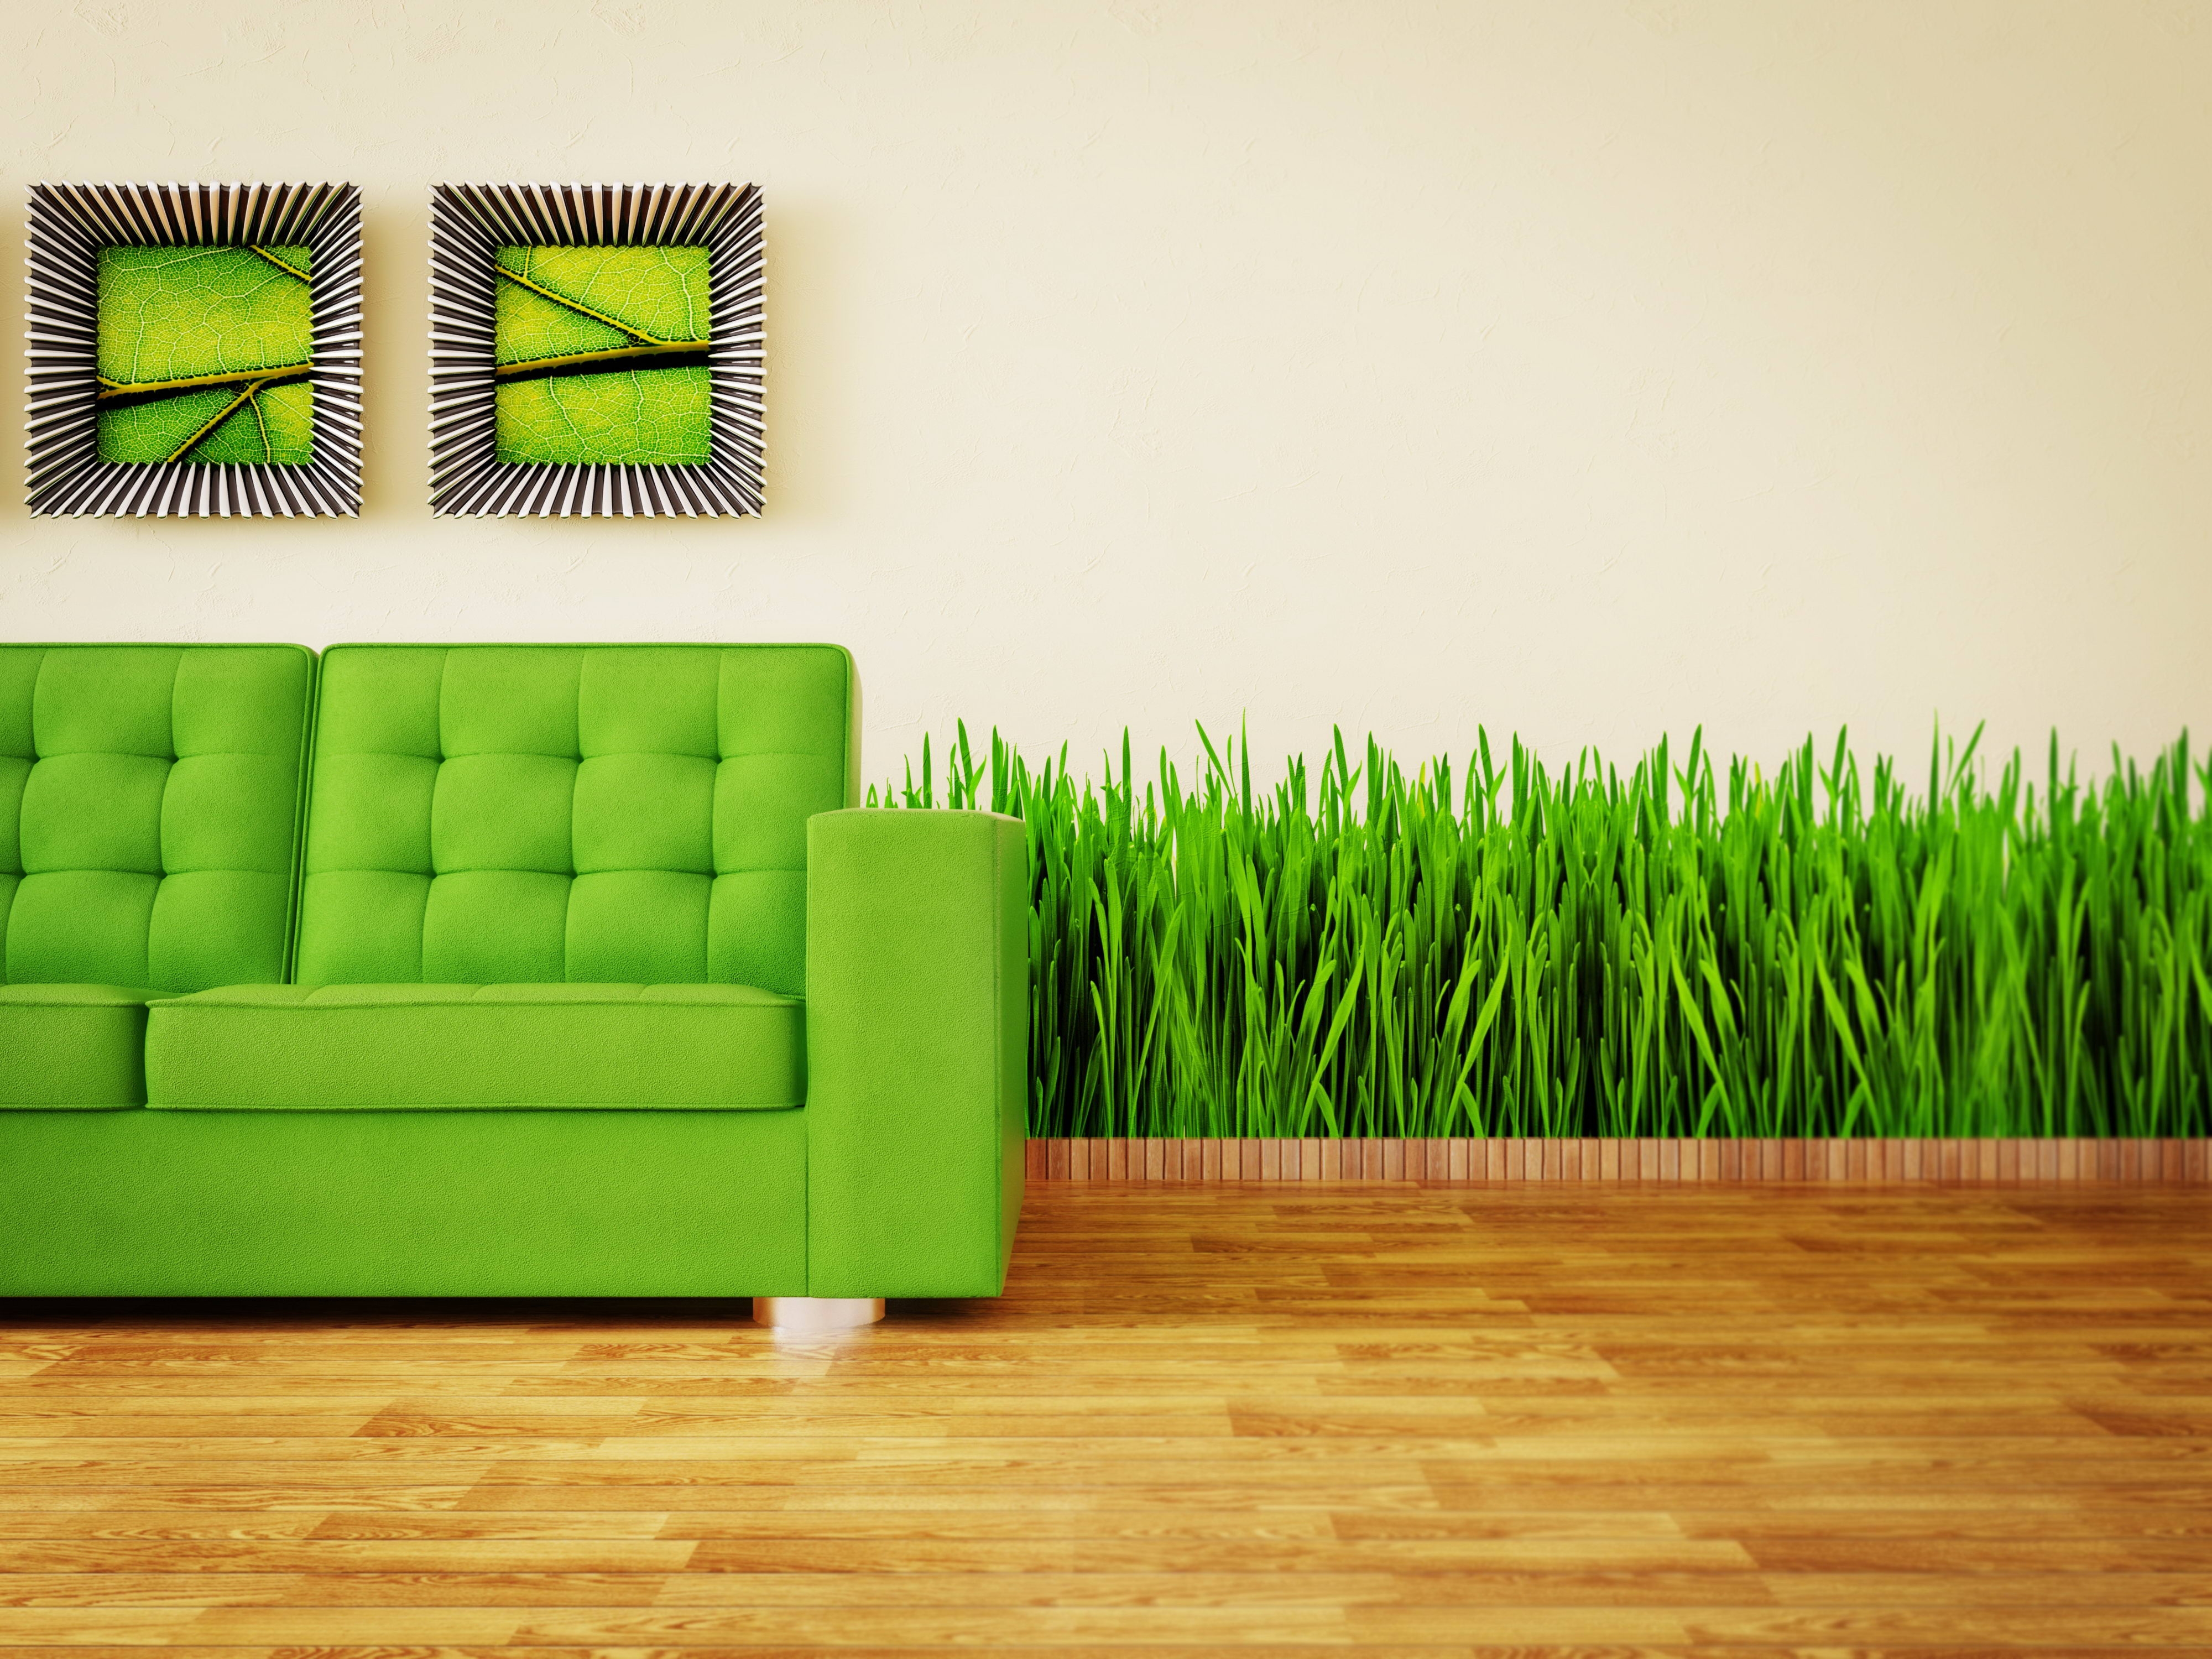 sofa, paintings, interior, grass, miscellanea, miscellaneous, greens